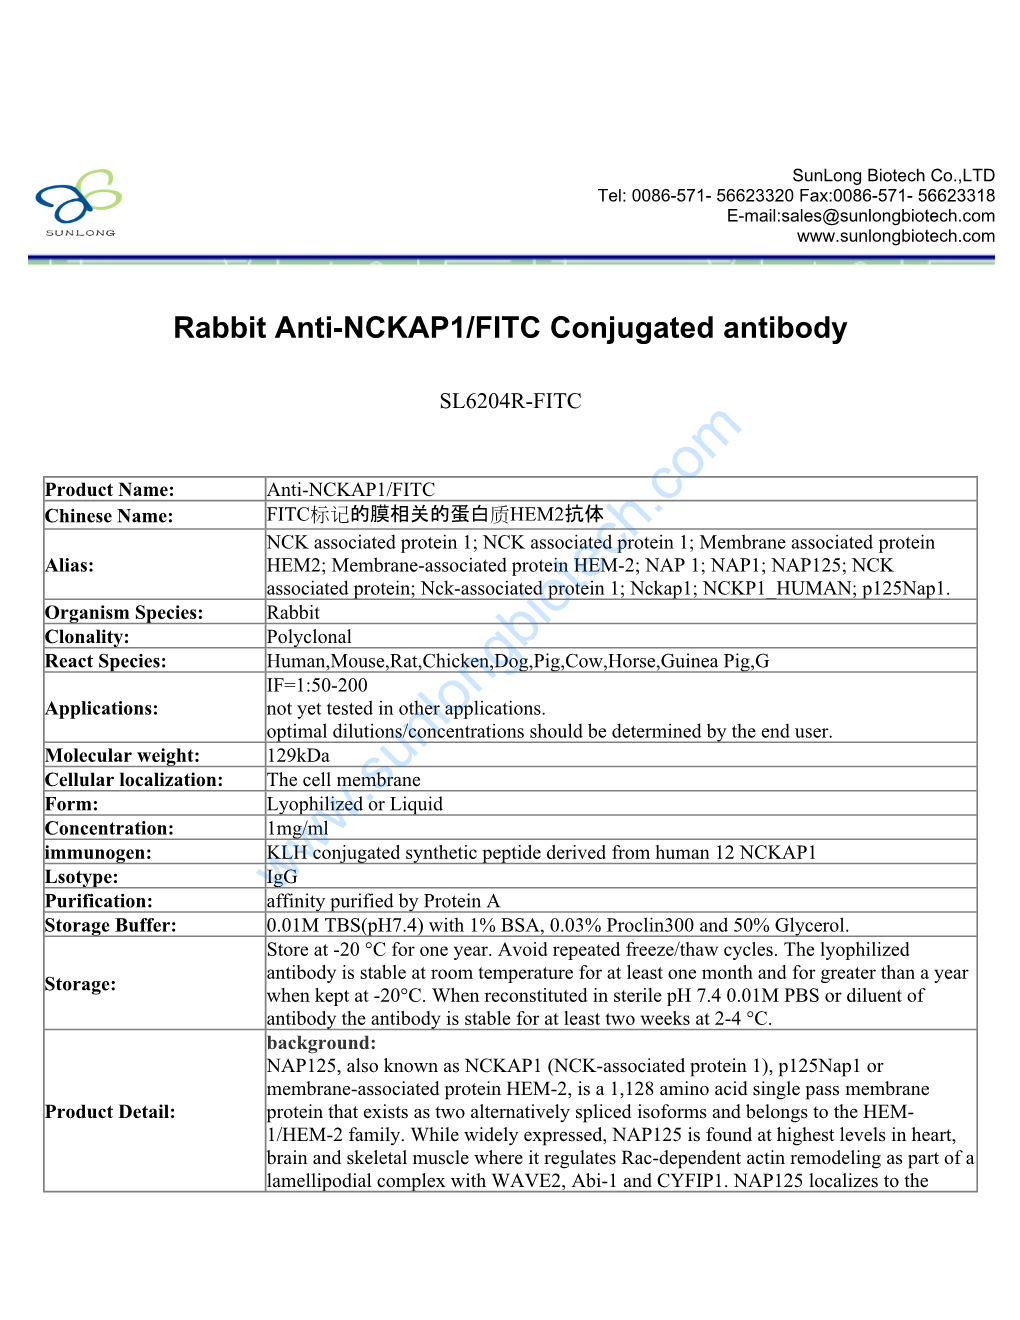 Rabbit Anti-NCKAP1/FITC Conjugated Antibody-SL6204R-FITC